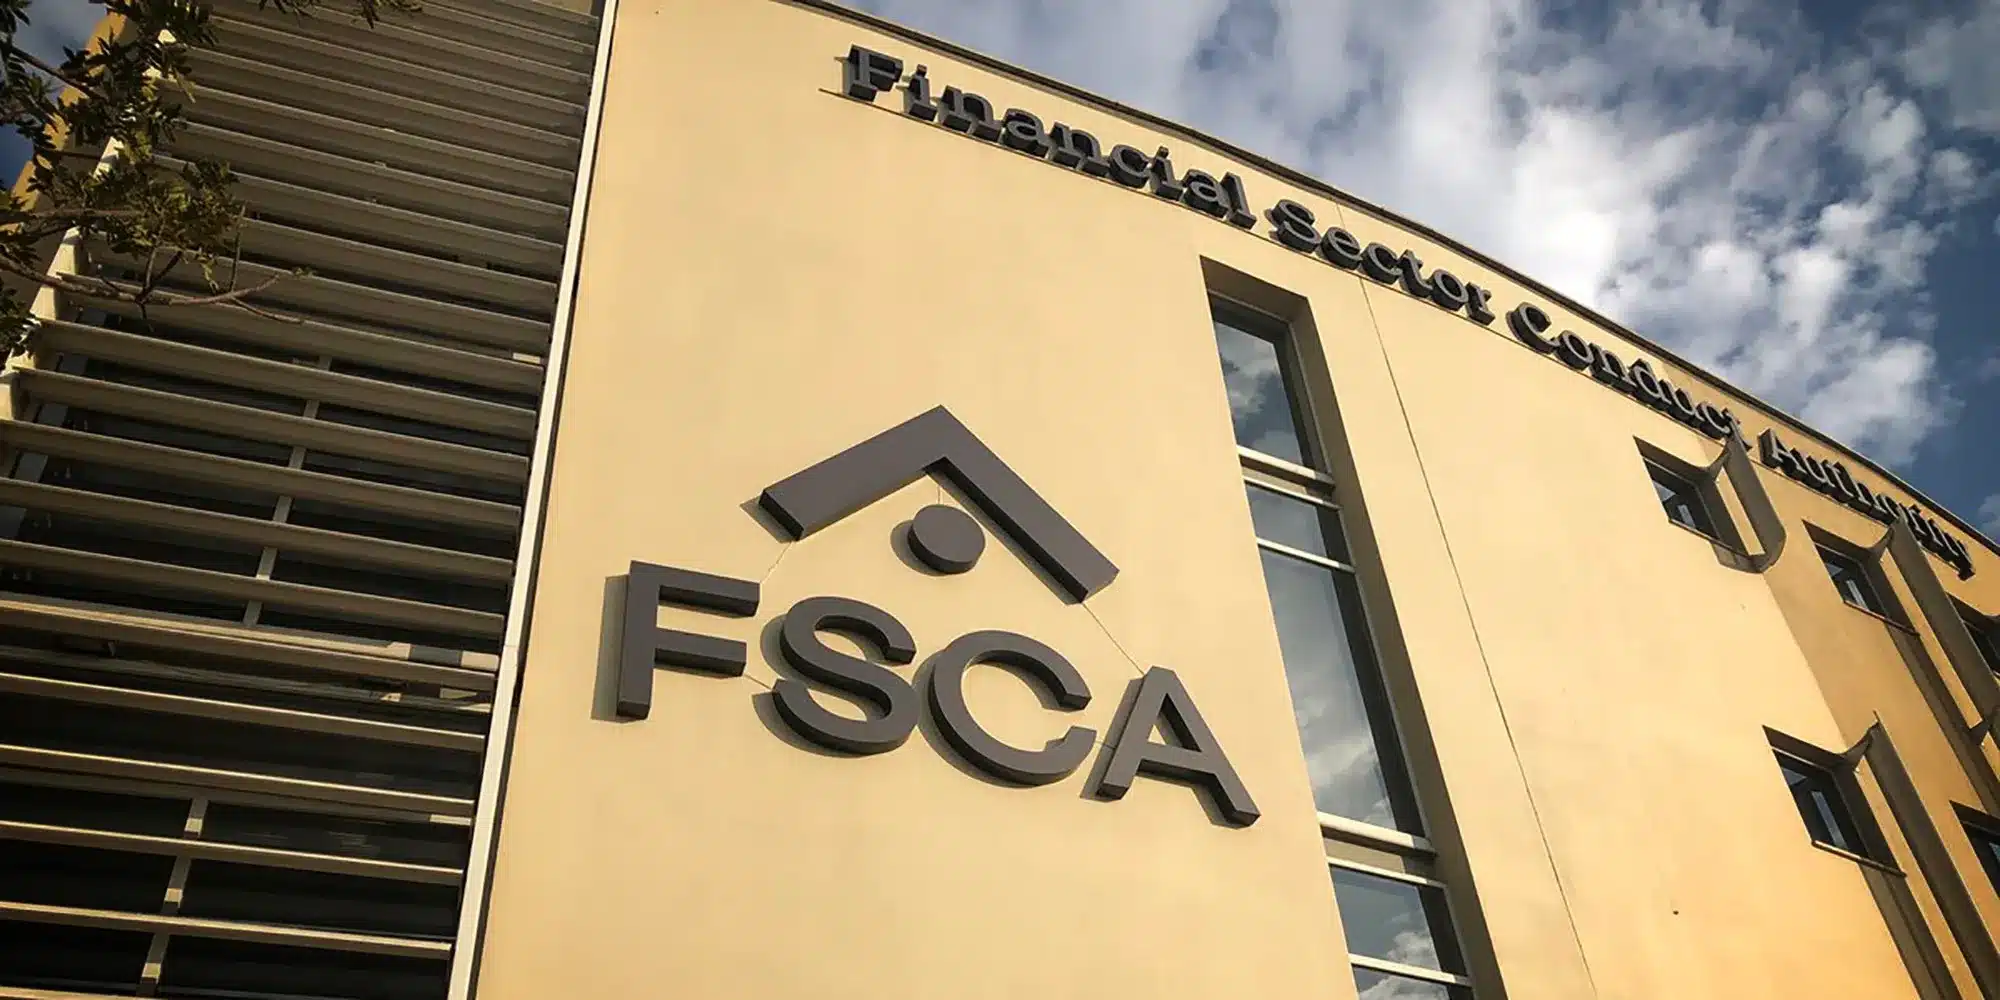 FSCA building